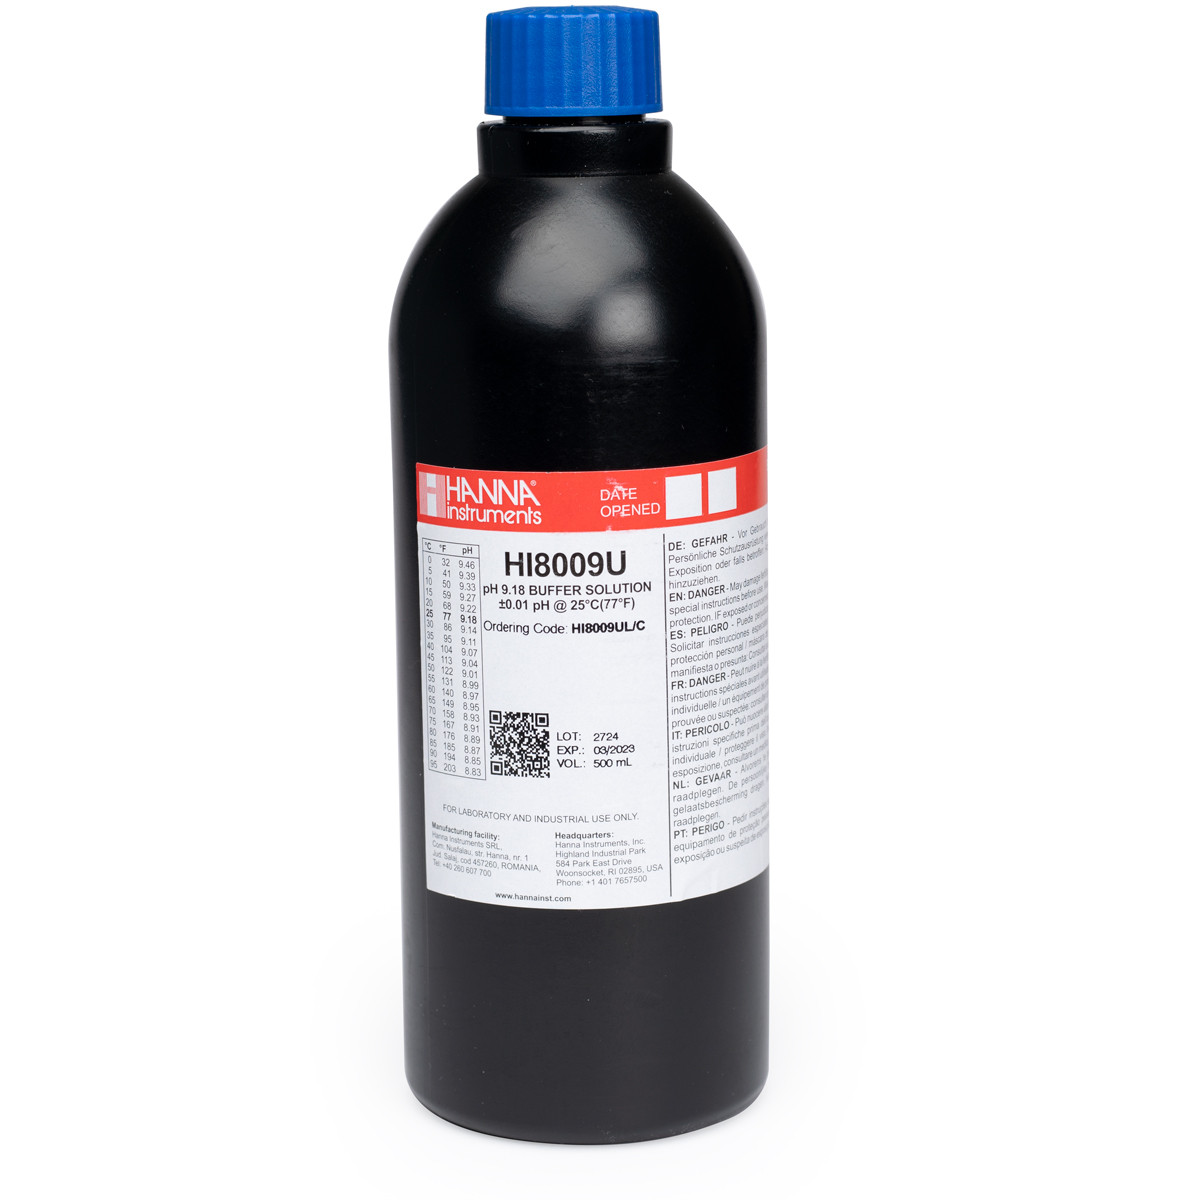 pH 9.18 Calibration Buffer in FDA Bottle w/ COA (500 mL)